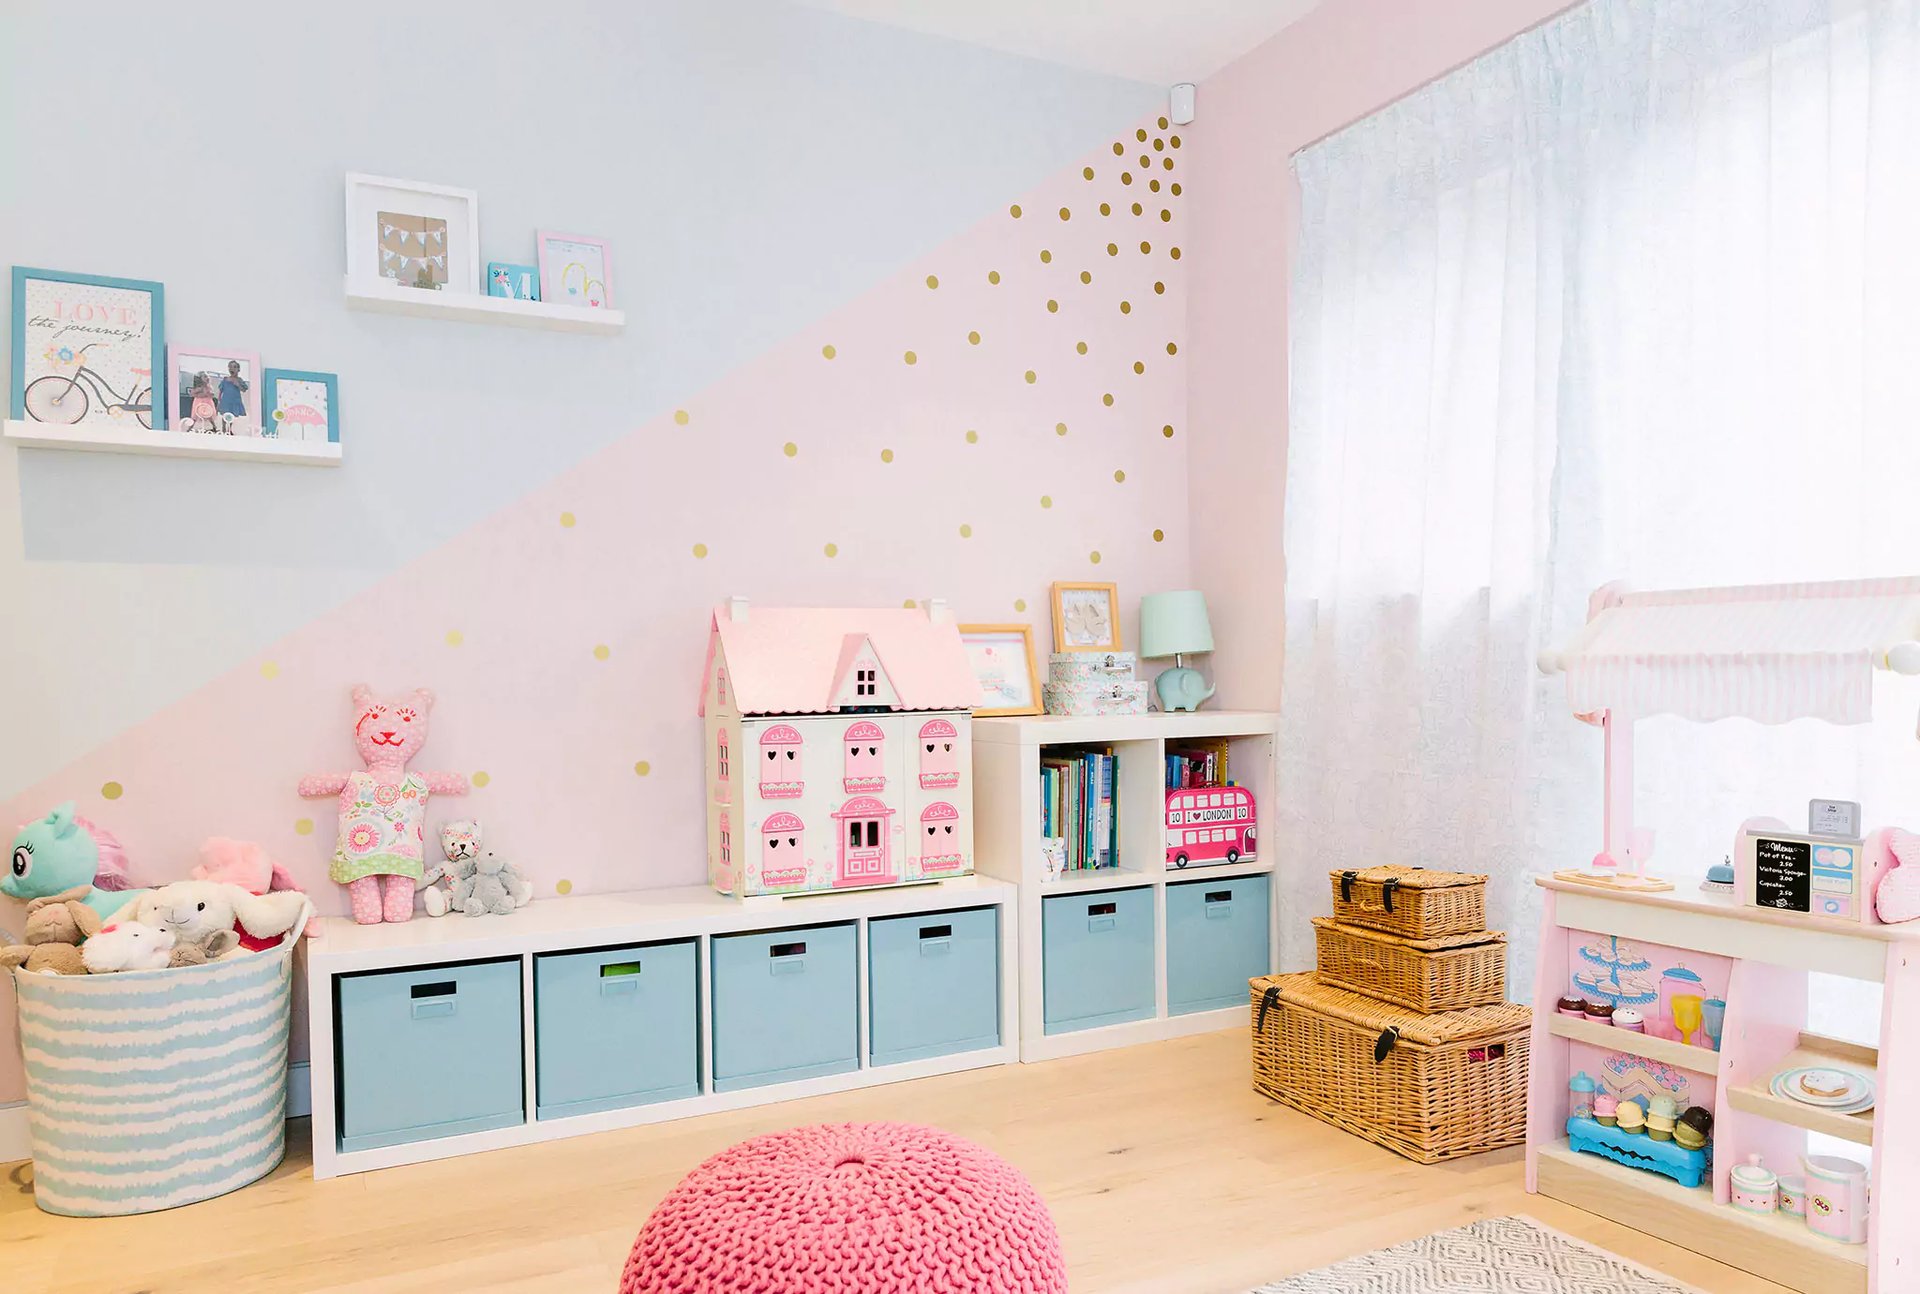 Kid's pink bedroom mural | Budget decorating ideas